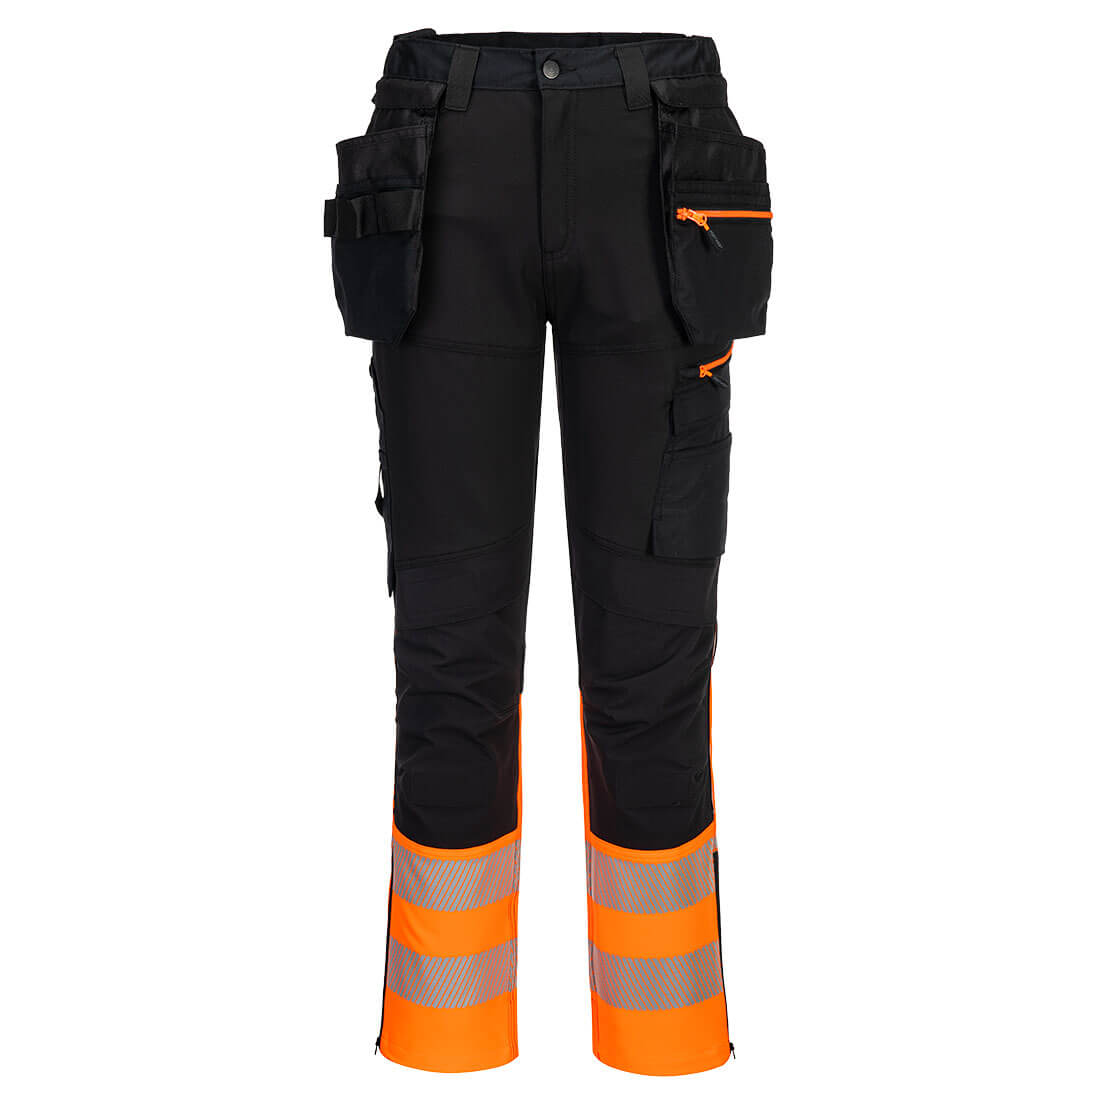 DX4 Hi-Vis Class 1 Craft Trousers